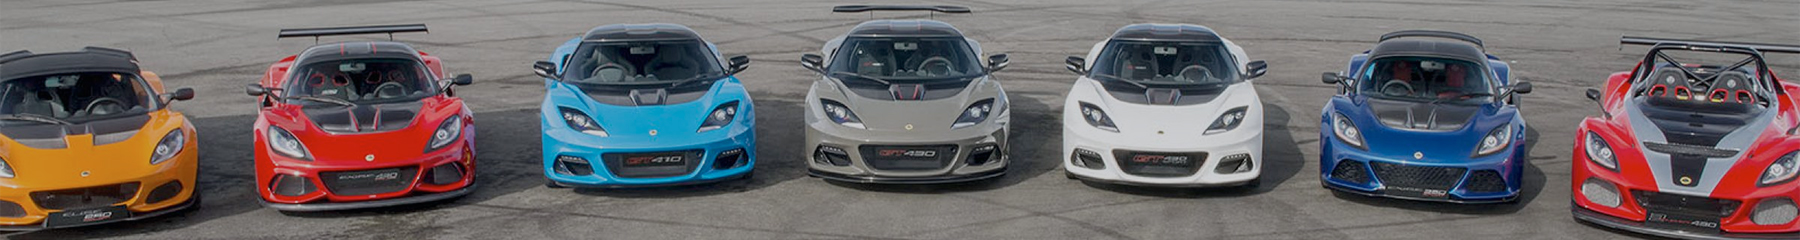 Lotus Cars Facing the Viewer